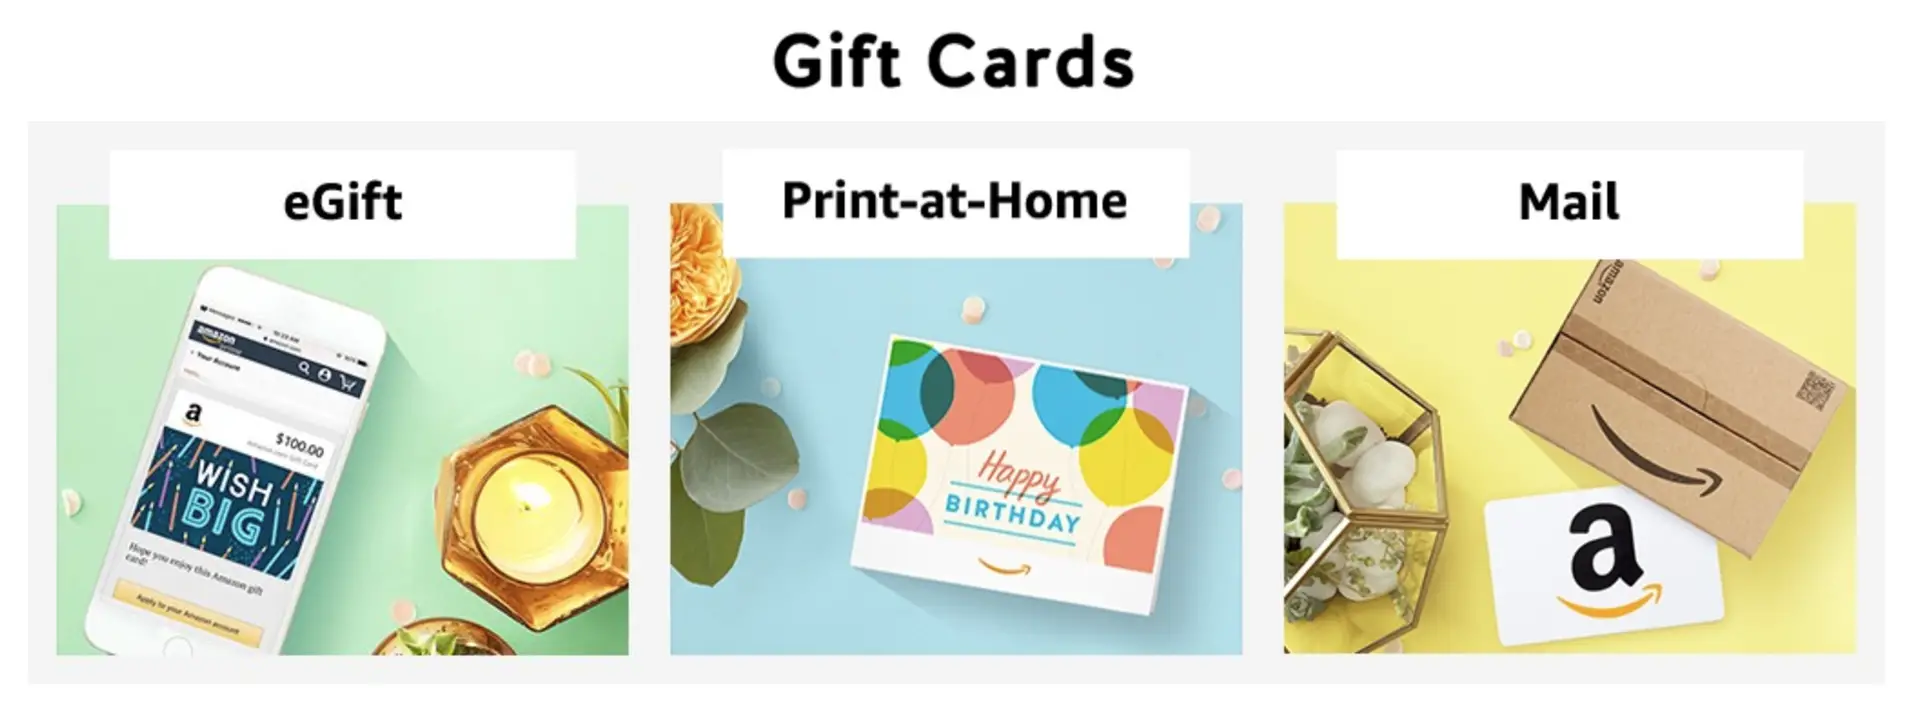 How to Take Surveys for Amazon Gift Cards (Plus 9 Sites